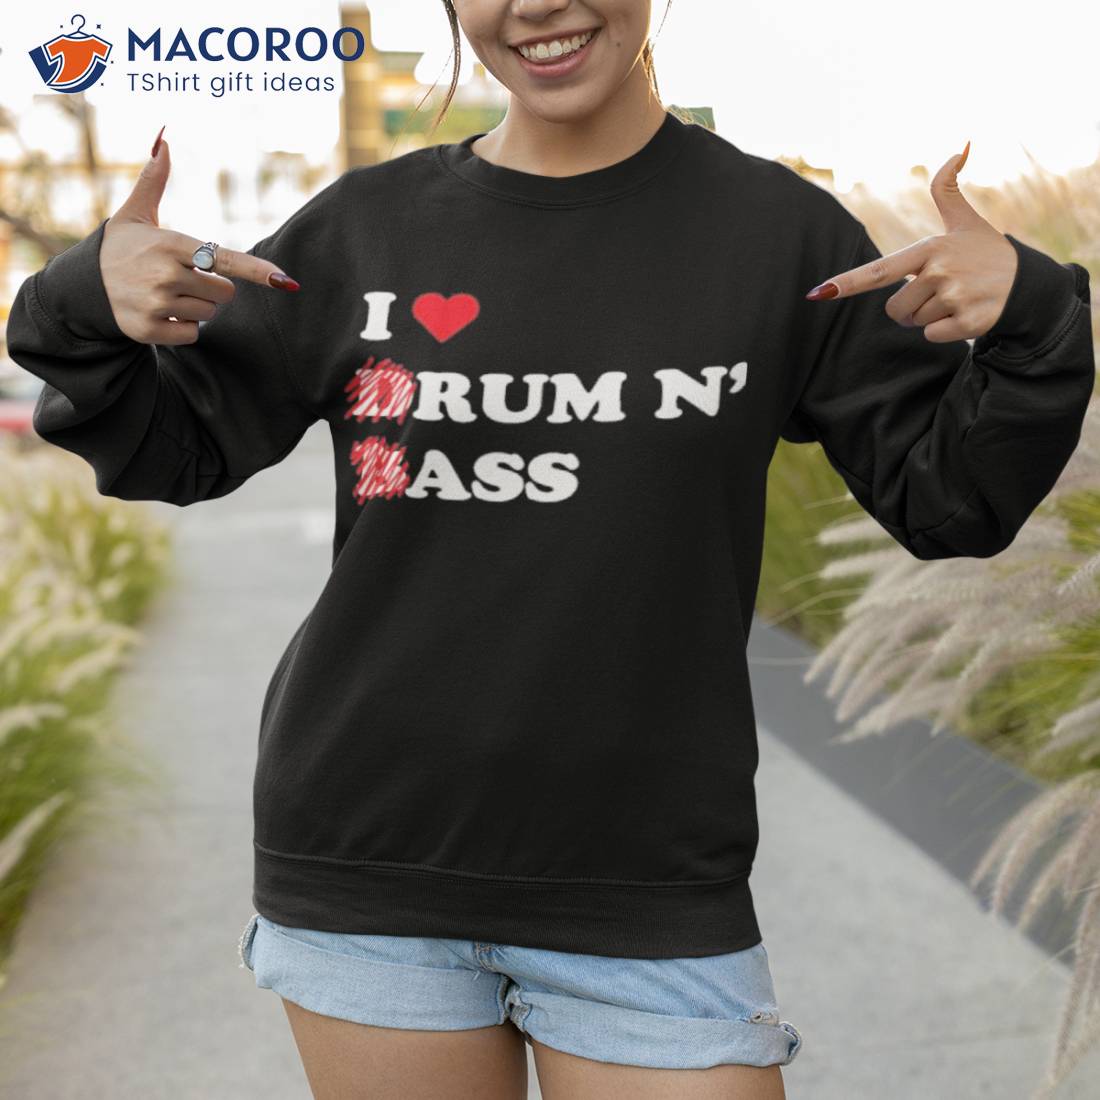 https://images.macoroo.com/wp-content/uploads/2023/05/i-love-drum-and-bass-shirt-sweatshirt-1-1.jpg